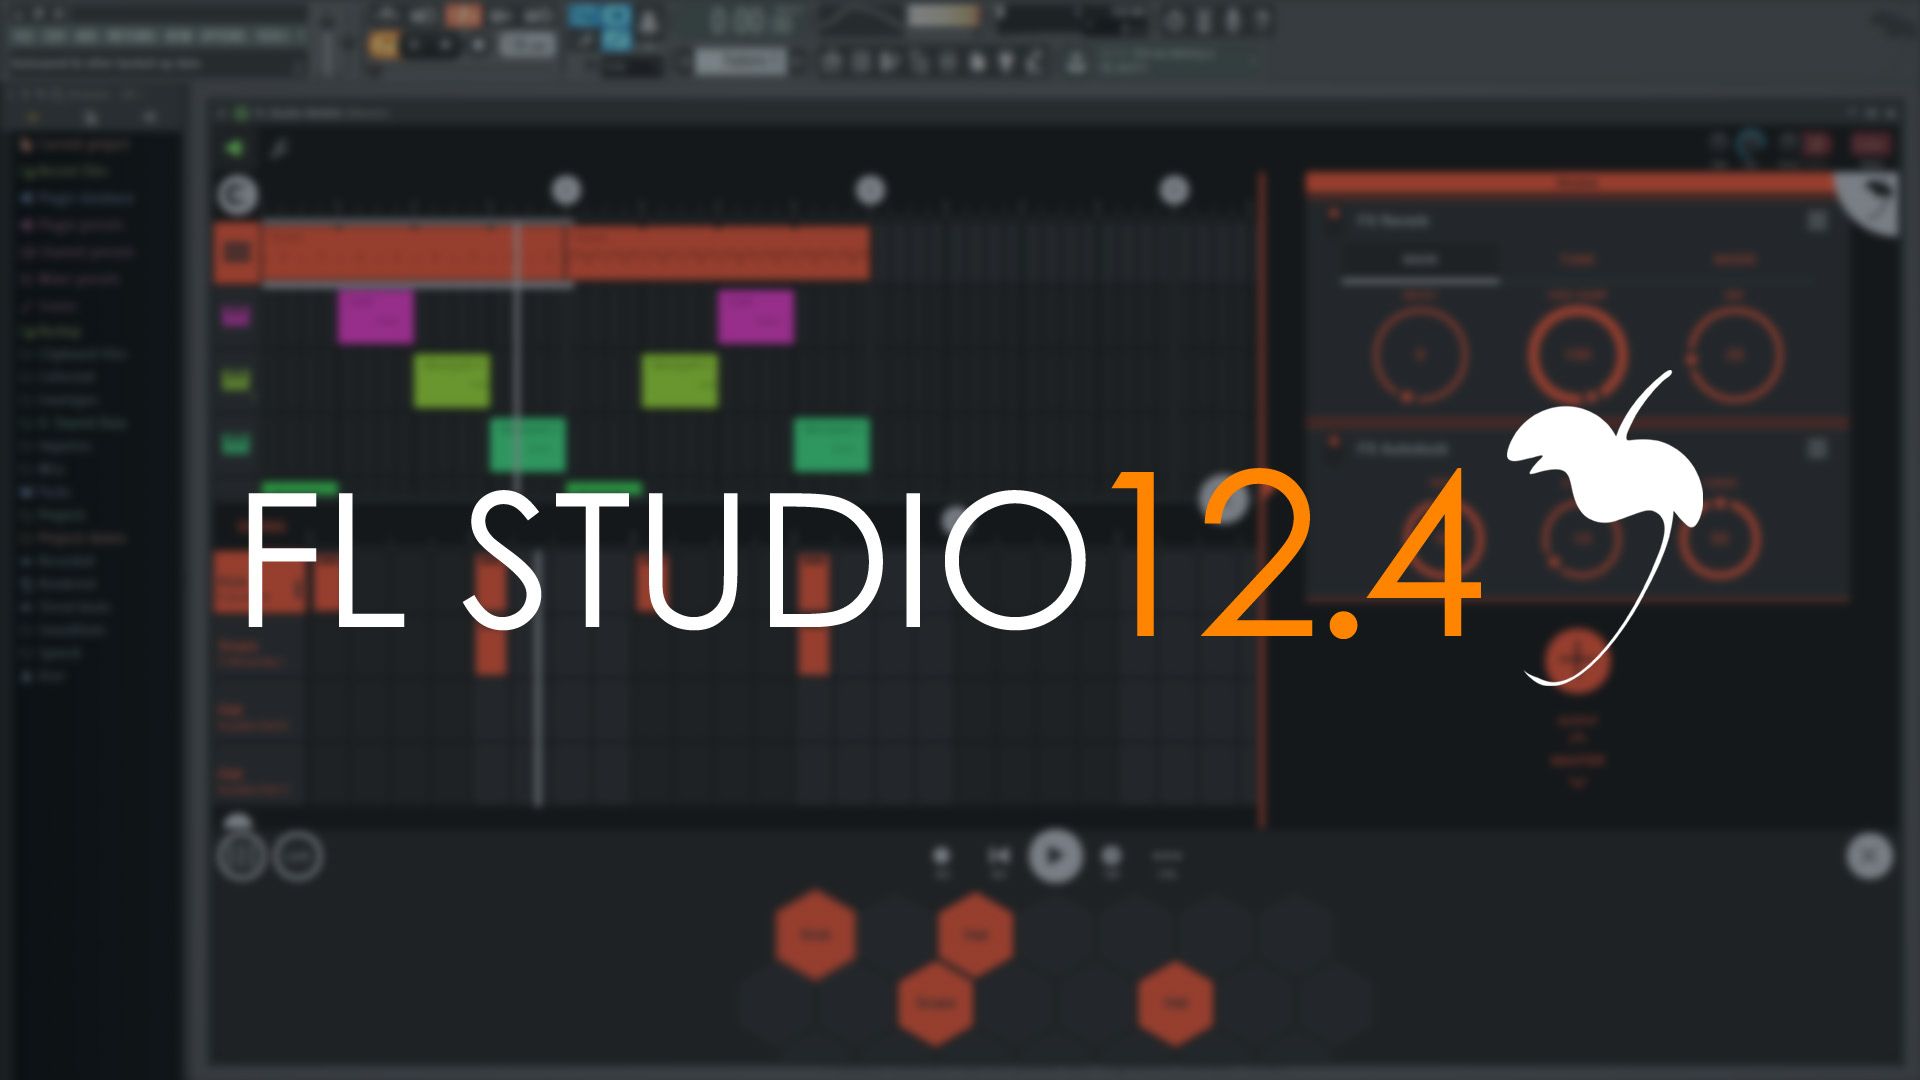 Fl Studio 12.4.2 Download